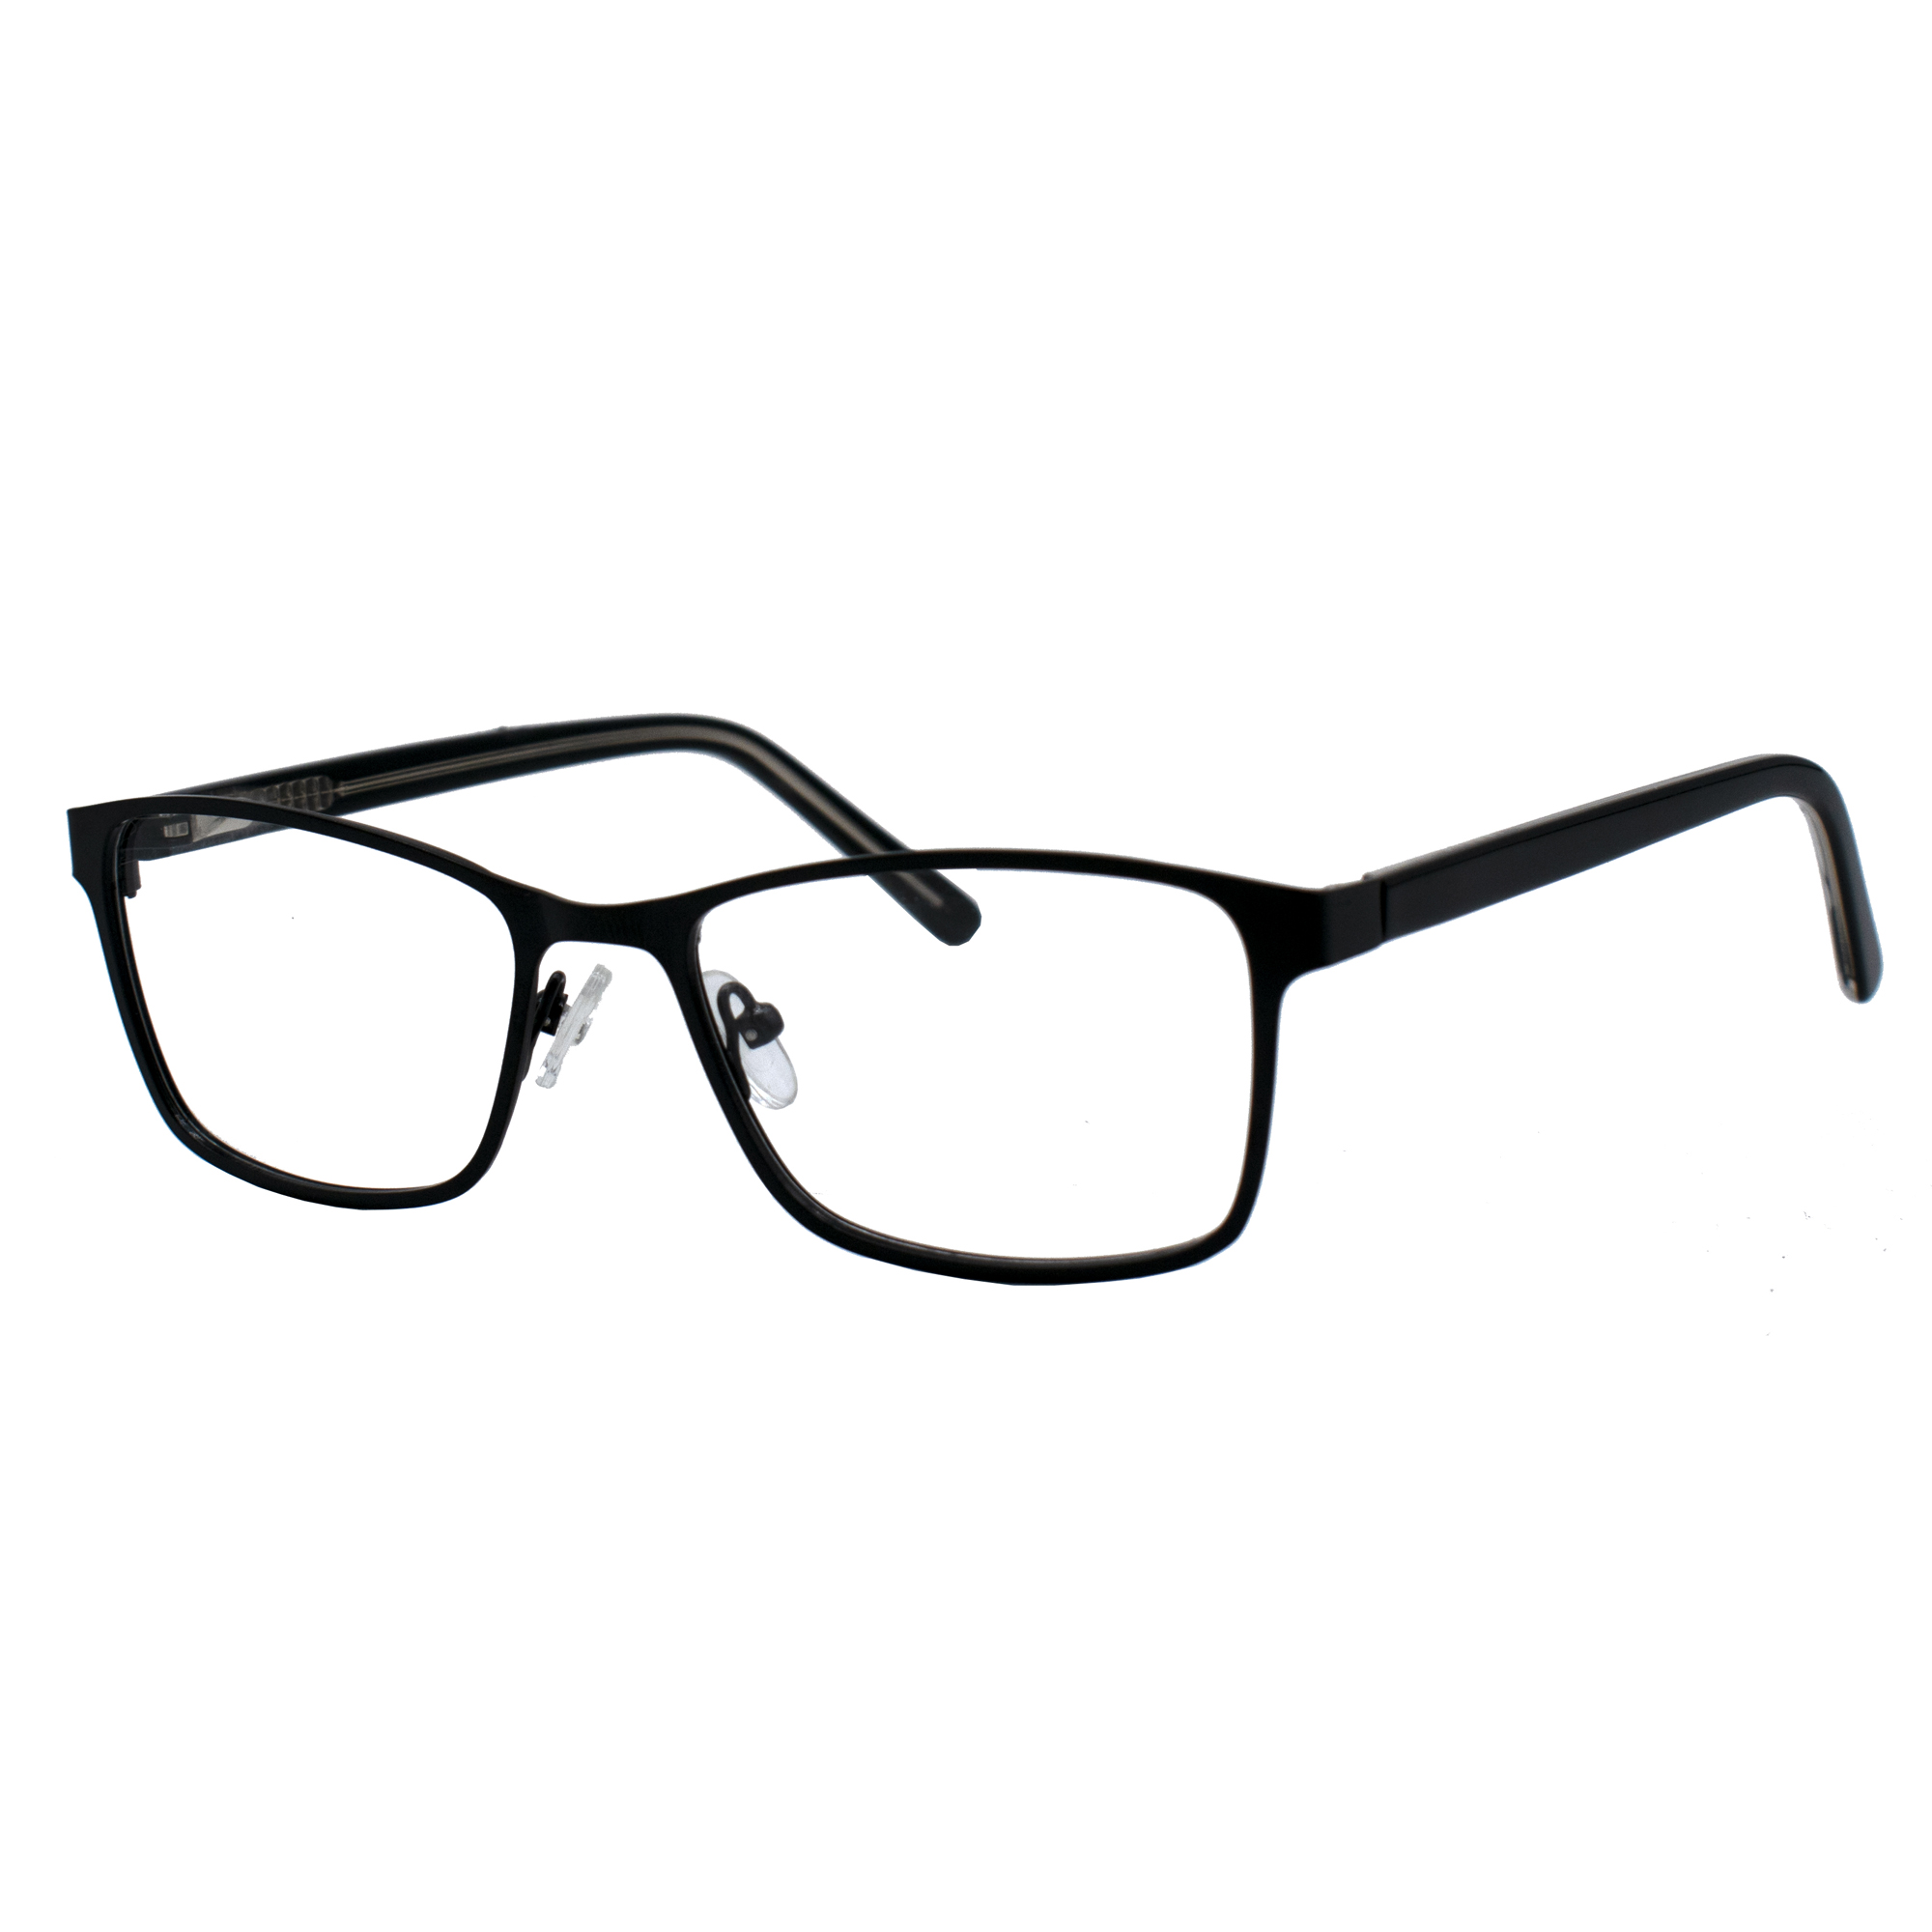 Walmart Women's Rx'able Eyeglasses, WM200951-1, Black, 51-17-135 - image 2 of 12